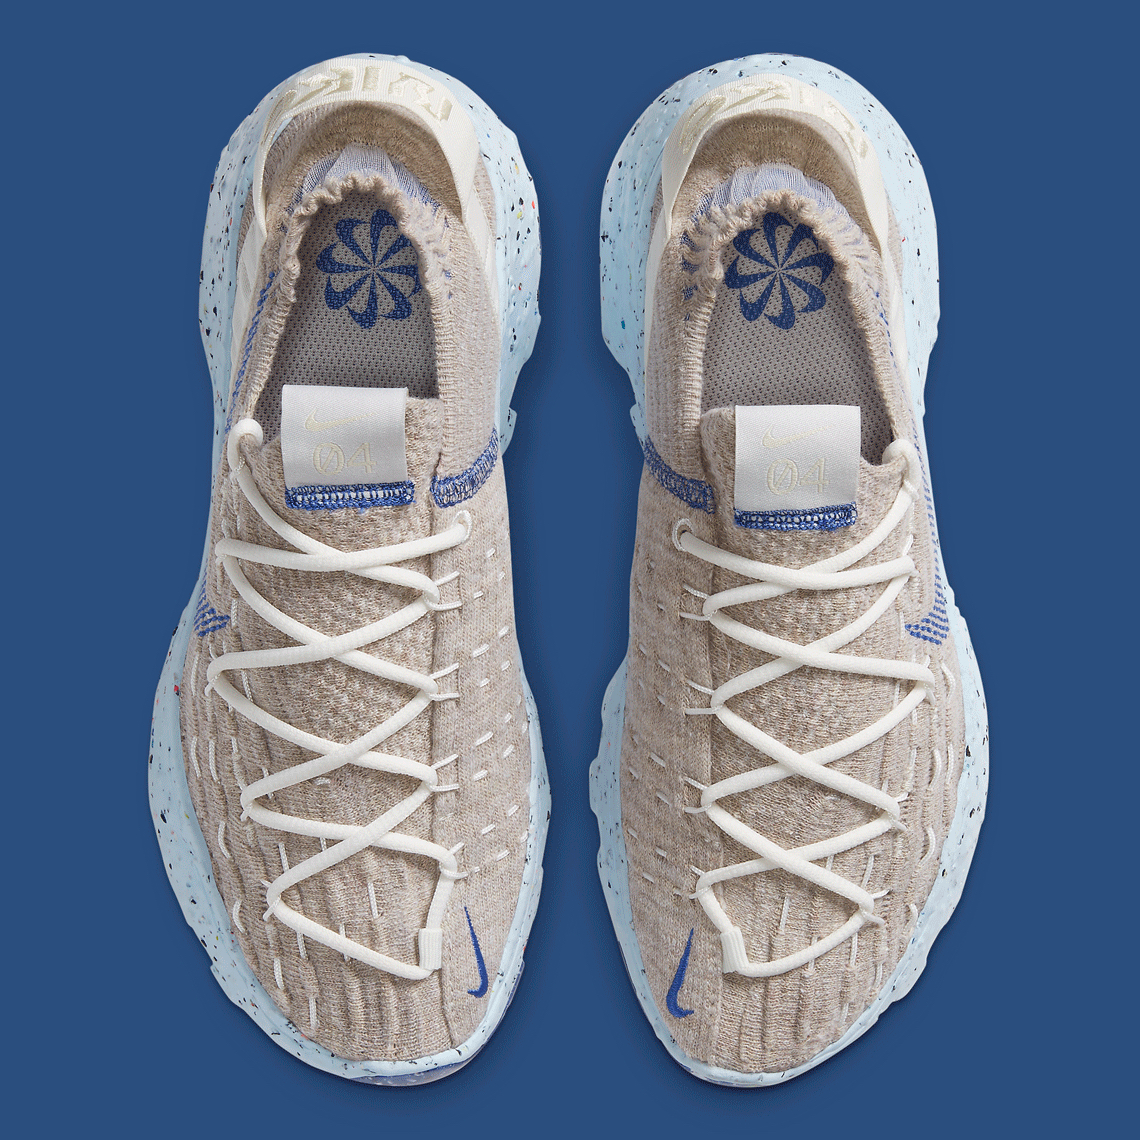 Nike Space Hippie 04 Tan Blue - Release Info | SneakerNews.com